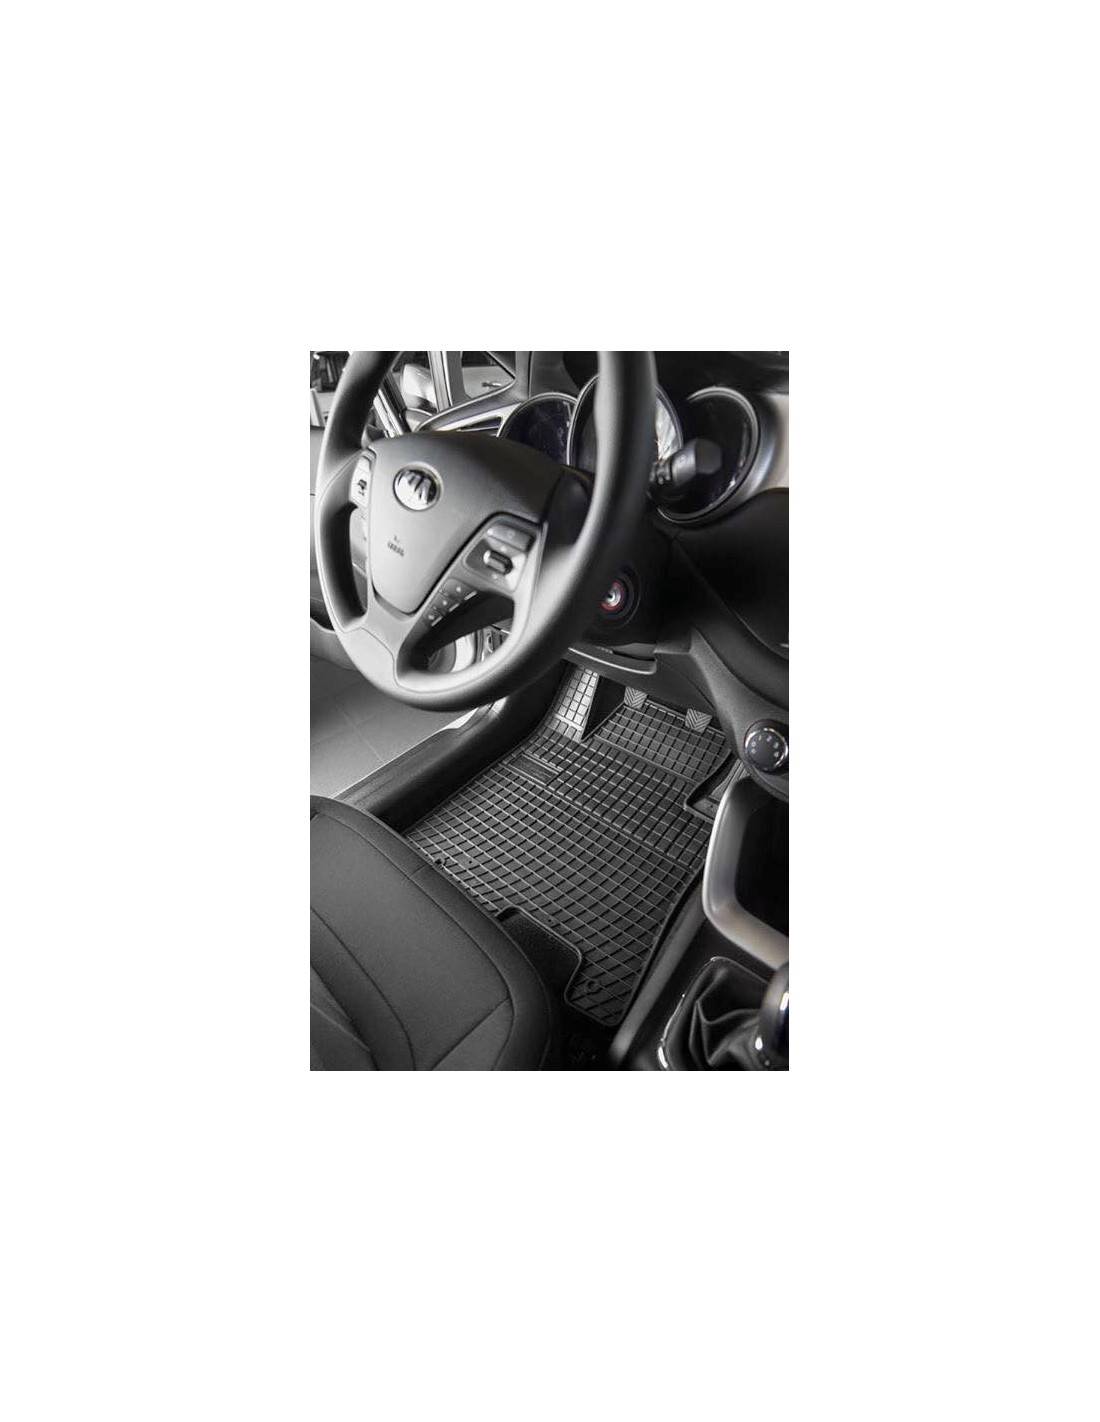 Alfombrilla Goma 3D compatible con SEAT Ibiza, SEAT Arona 202009 - Vistecar  Accesorios